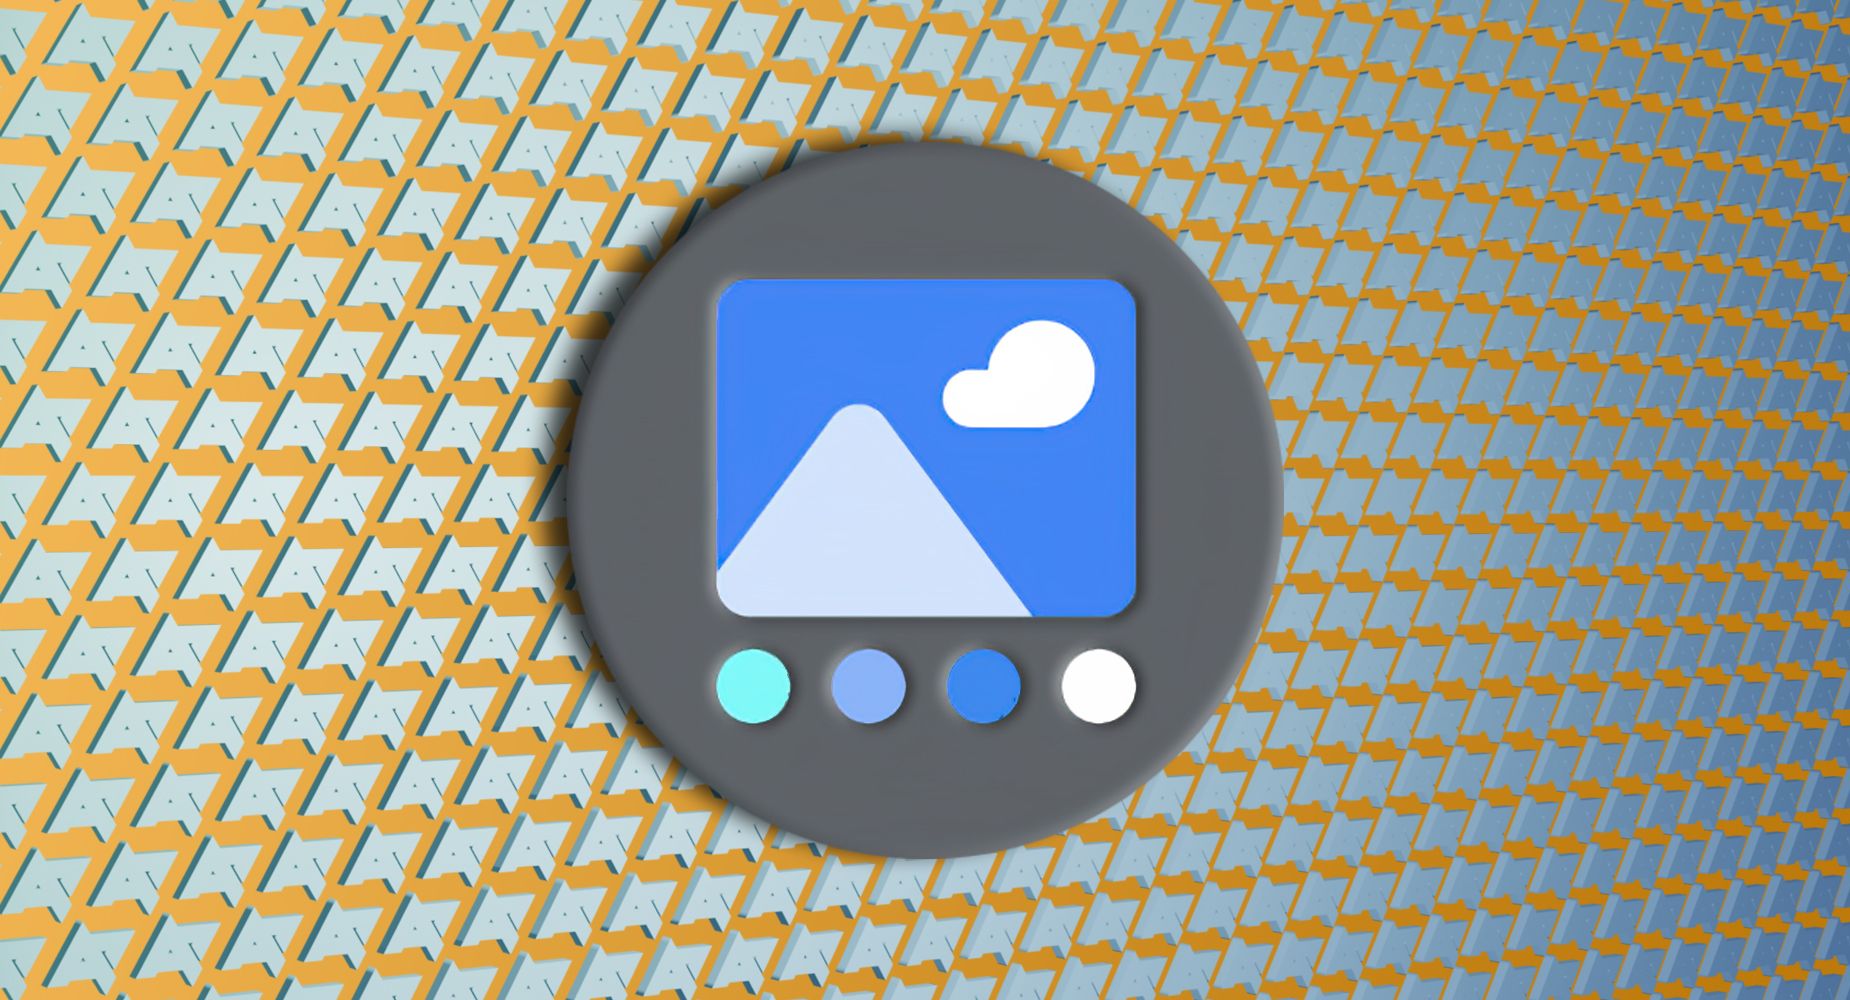 ChromeOS Personalization Hub icon overlaid on an array of AP logos